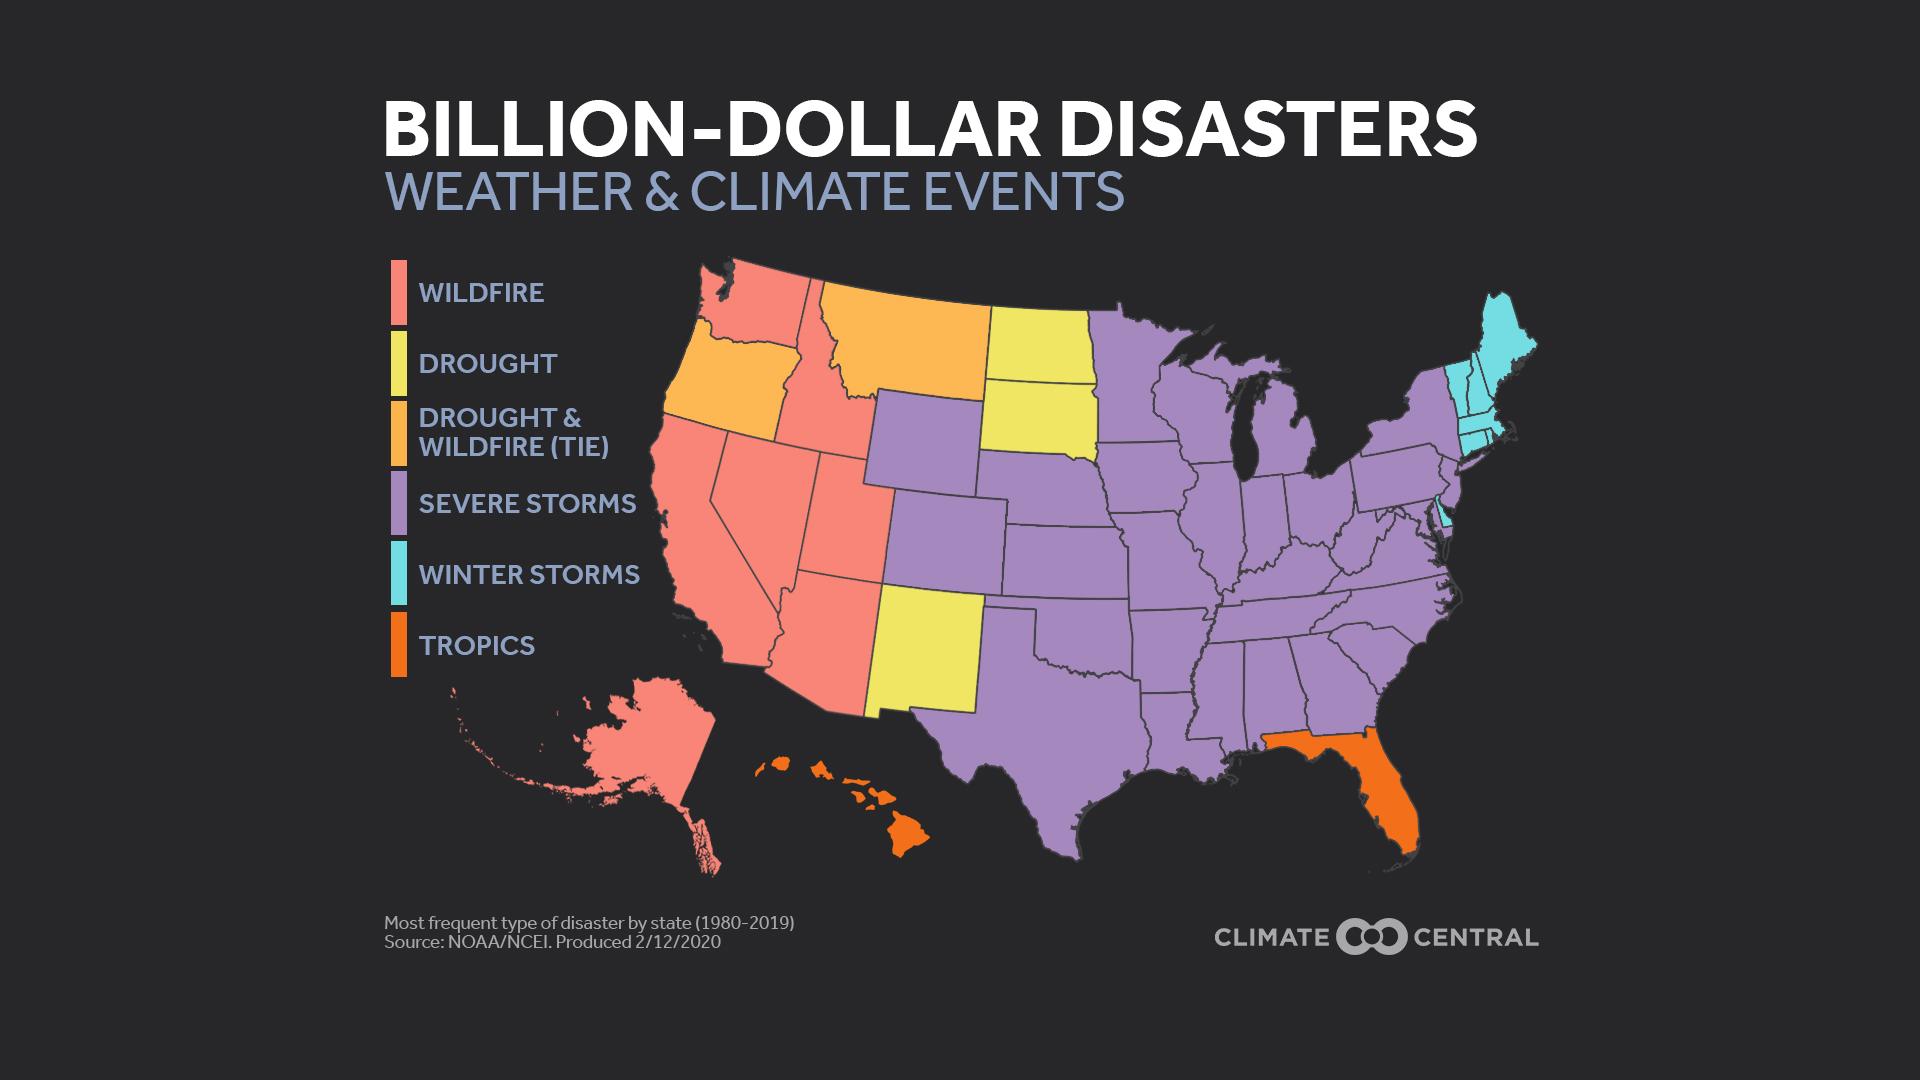 Billion-Dollar Disasters by Decade (2020)